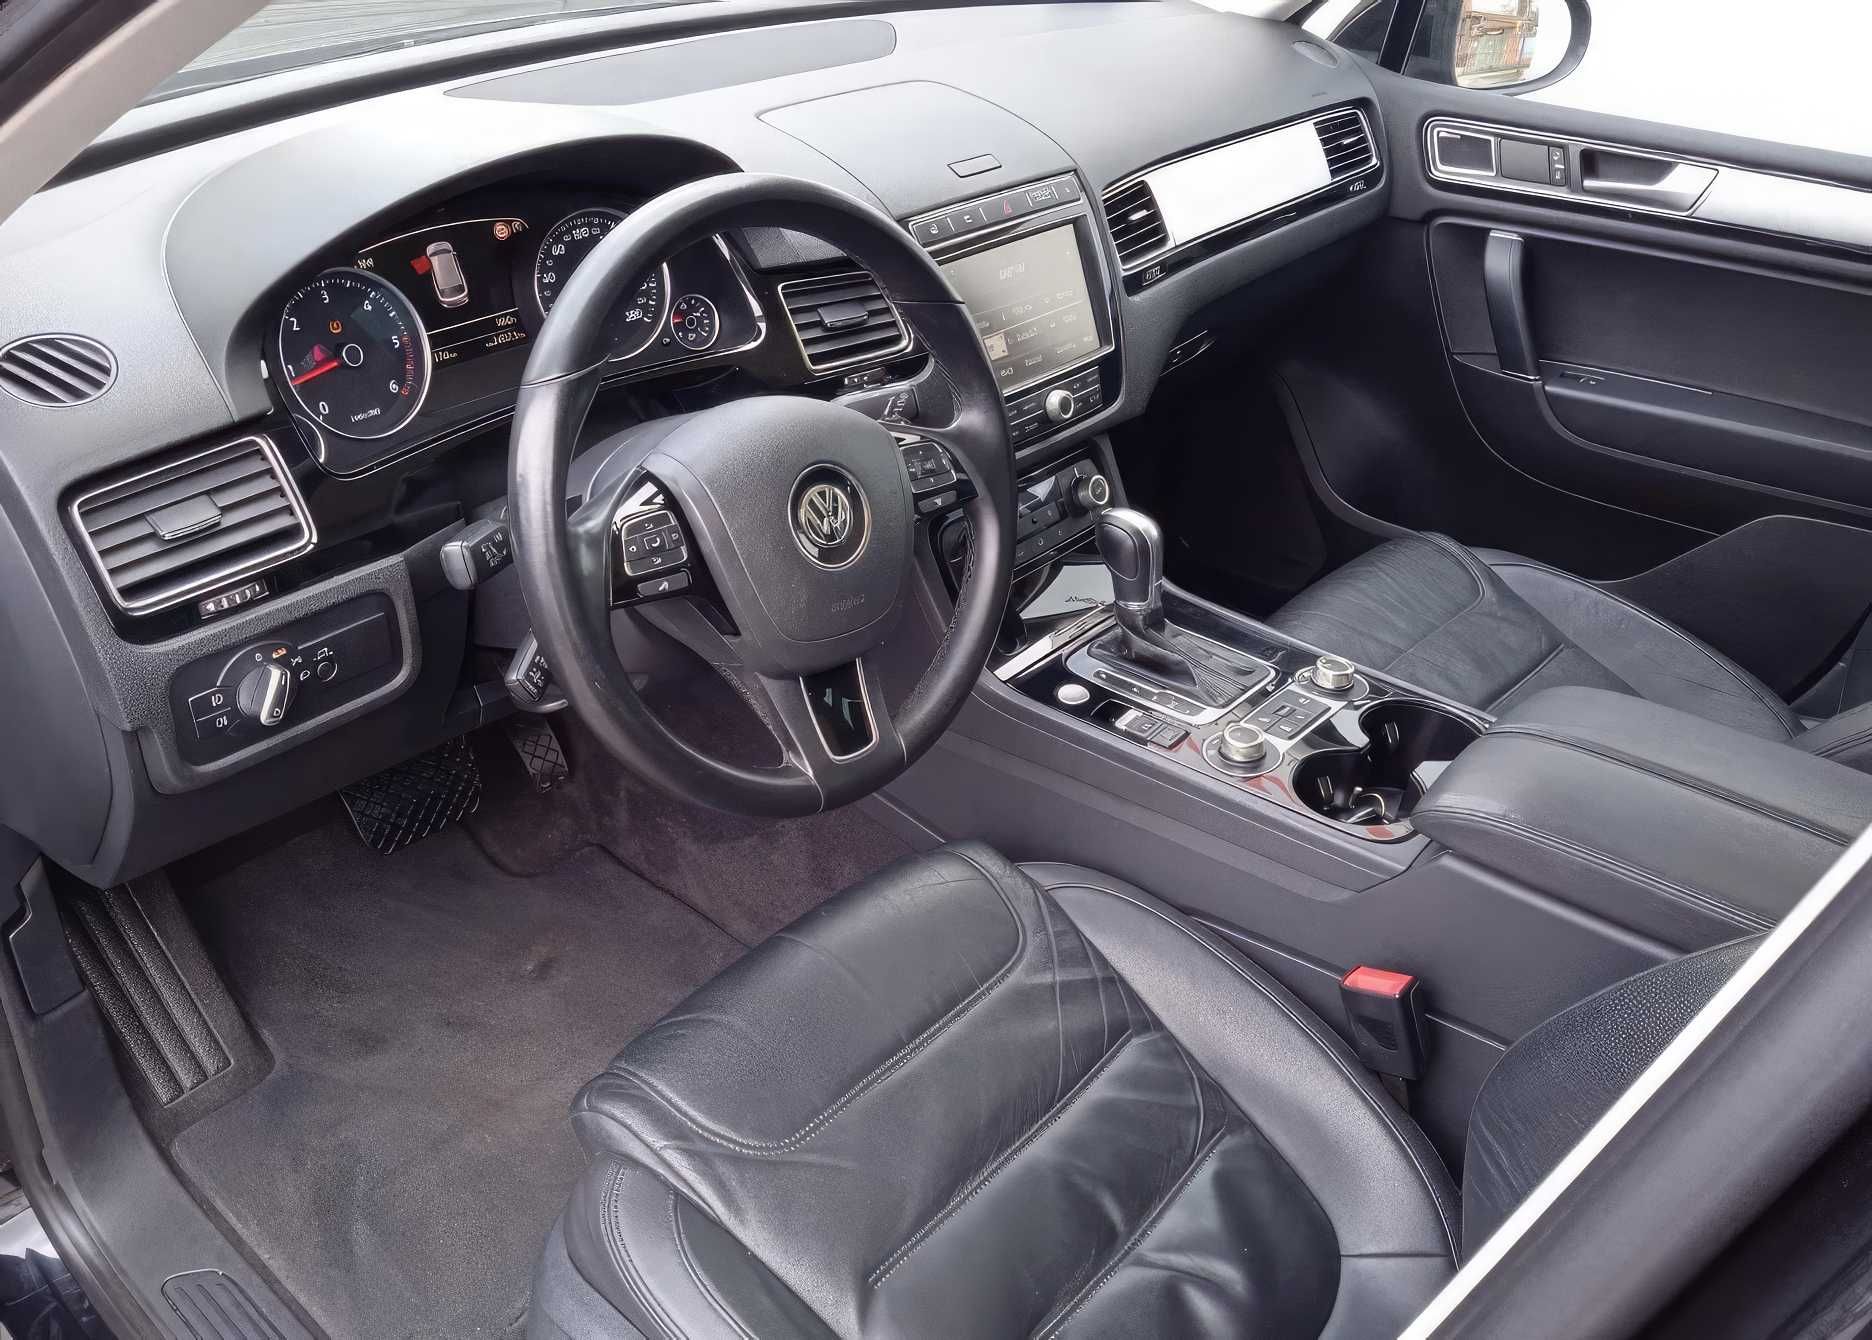 Volkswagen Touareg TDI 2015